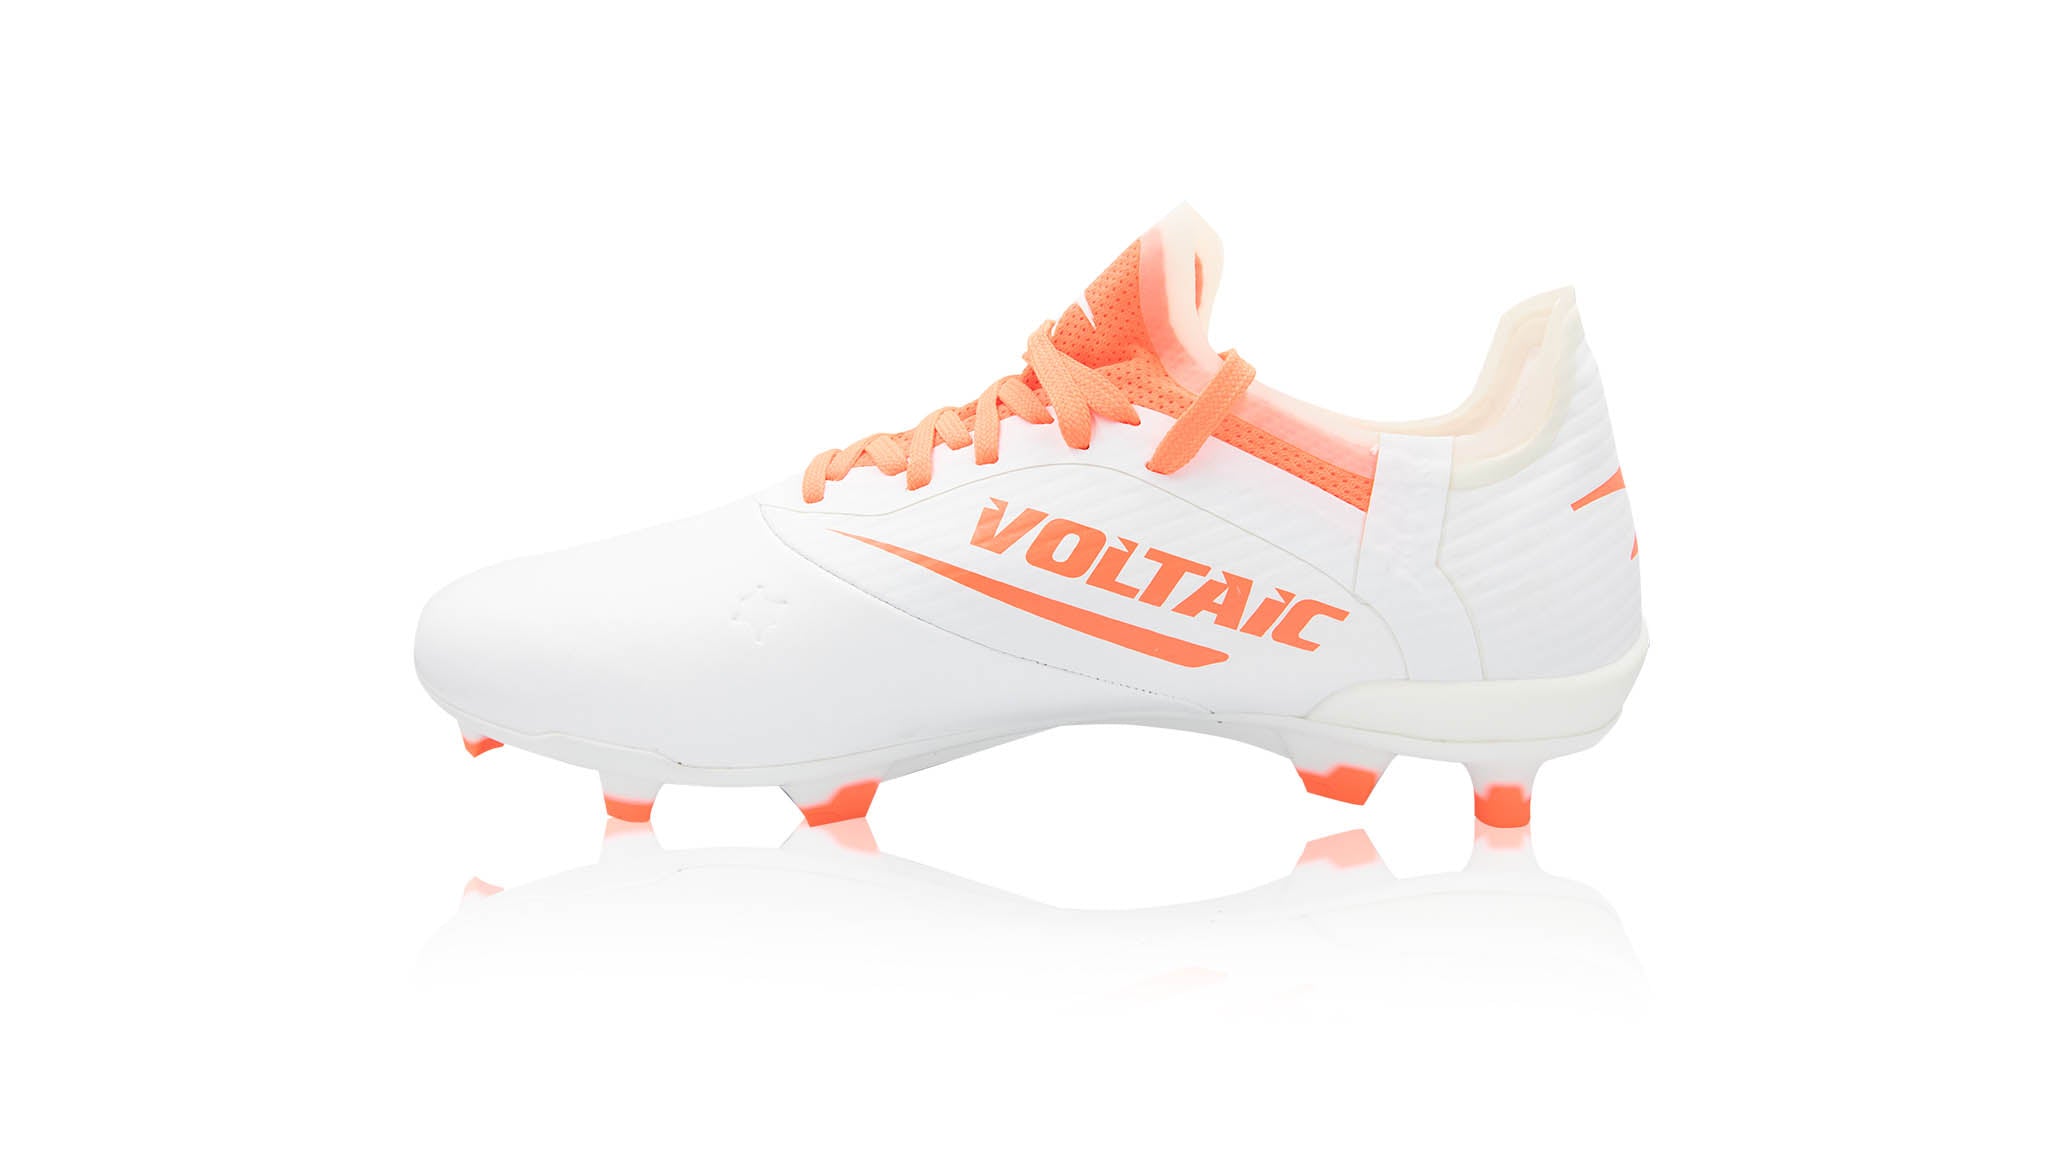 Voltaic 2 Men's Football Boots